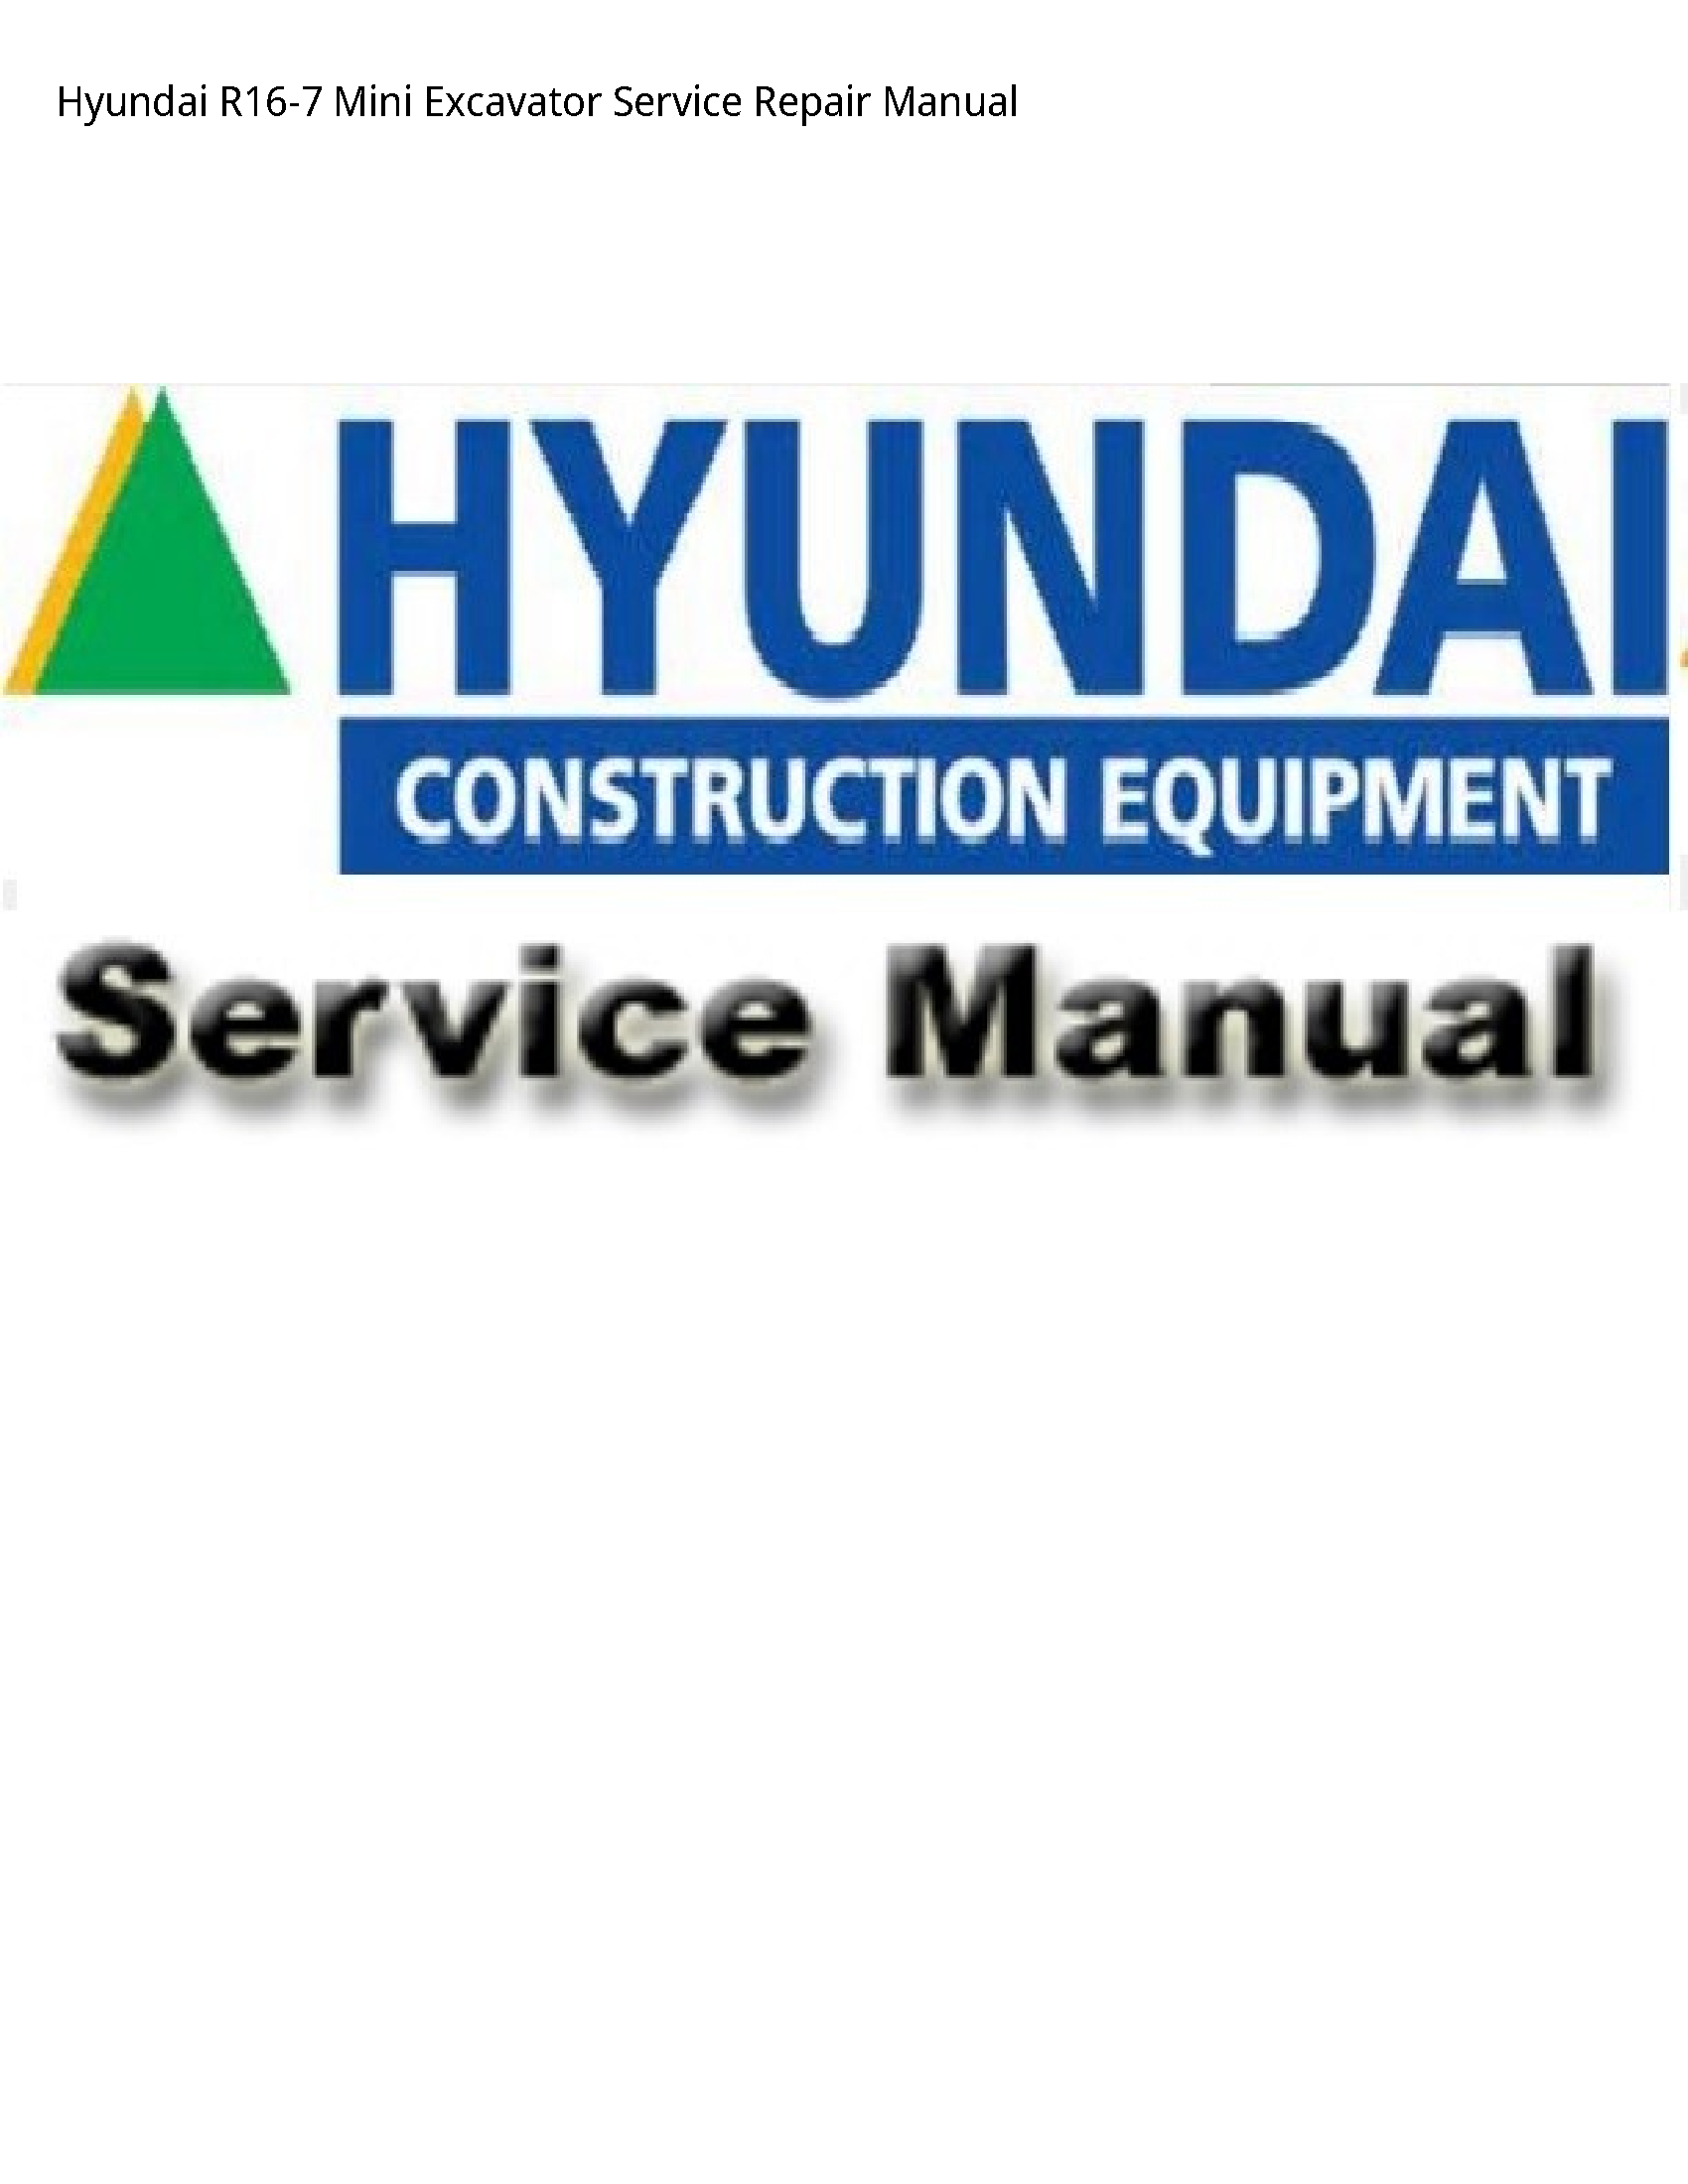 Hyundai R16-7 Mini Excavator manual